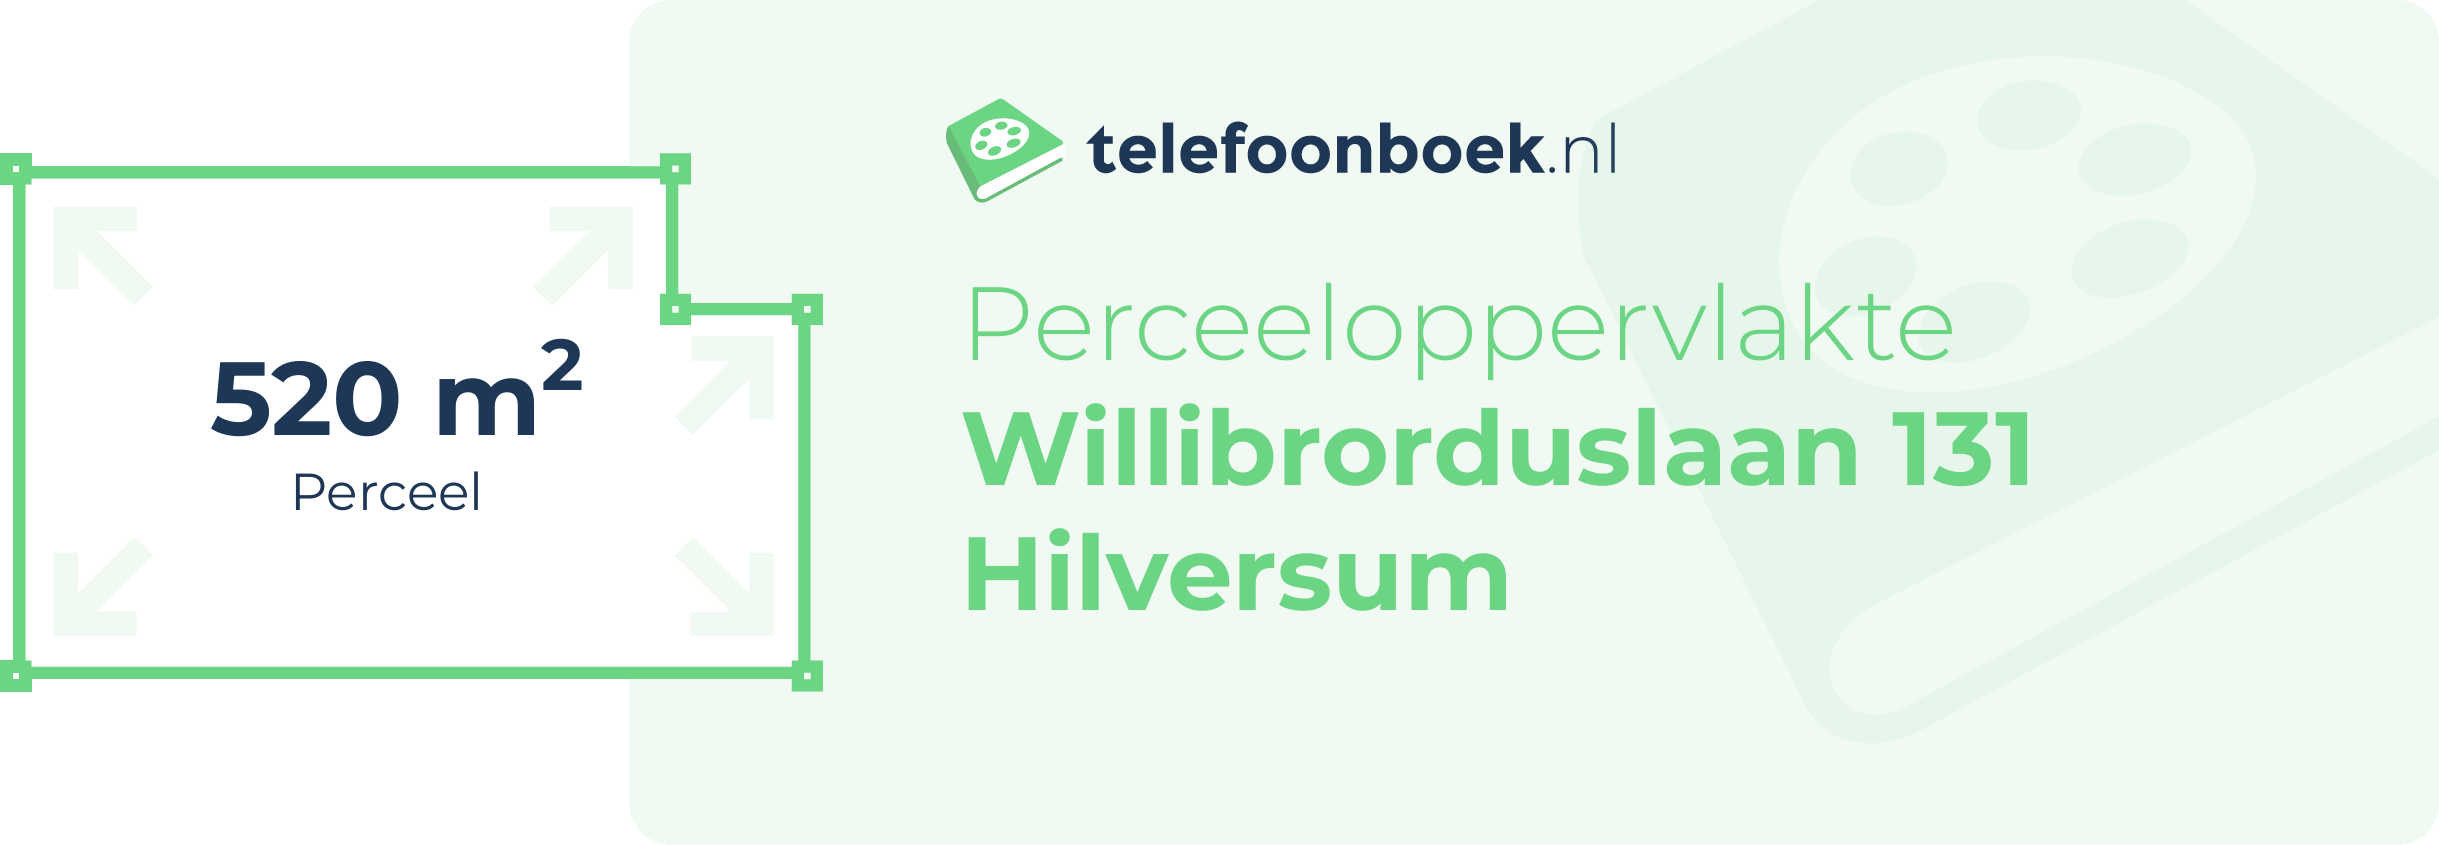 Perceeloppervlakte Willibrorduslaan 131 Hilversum